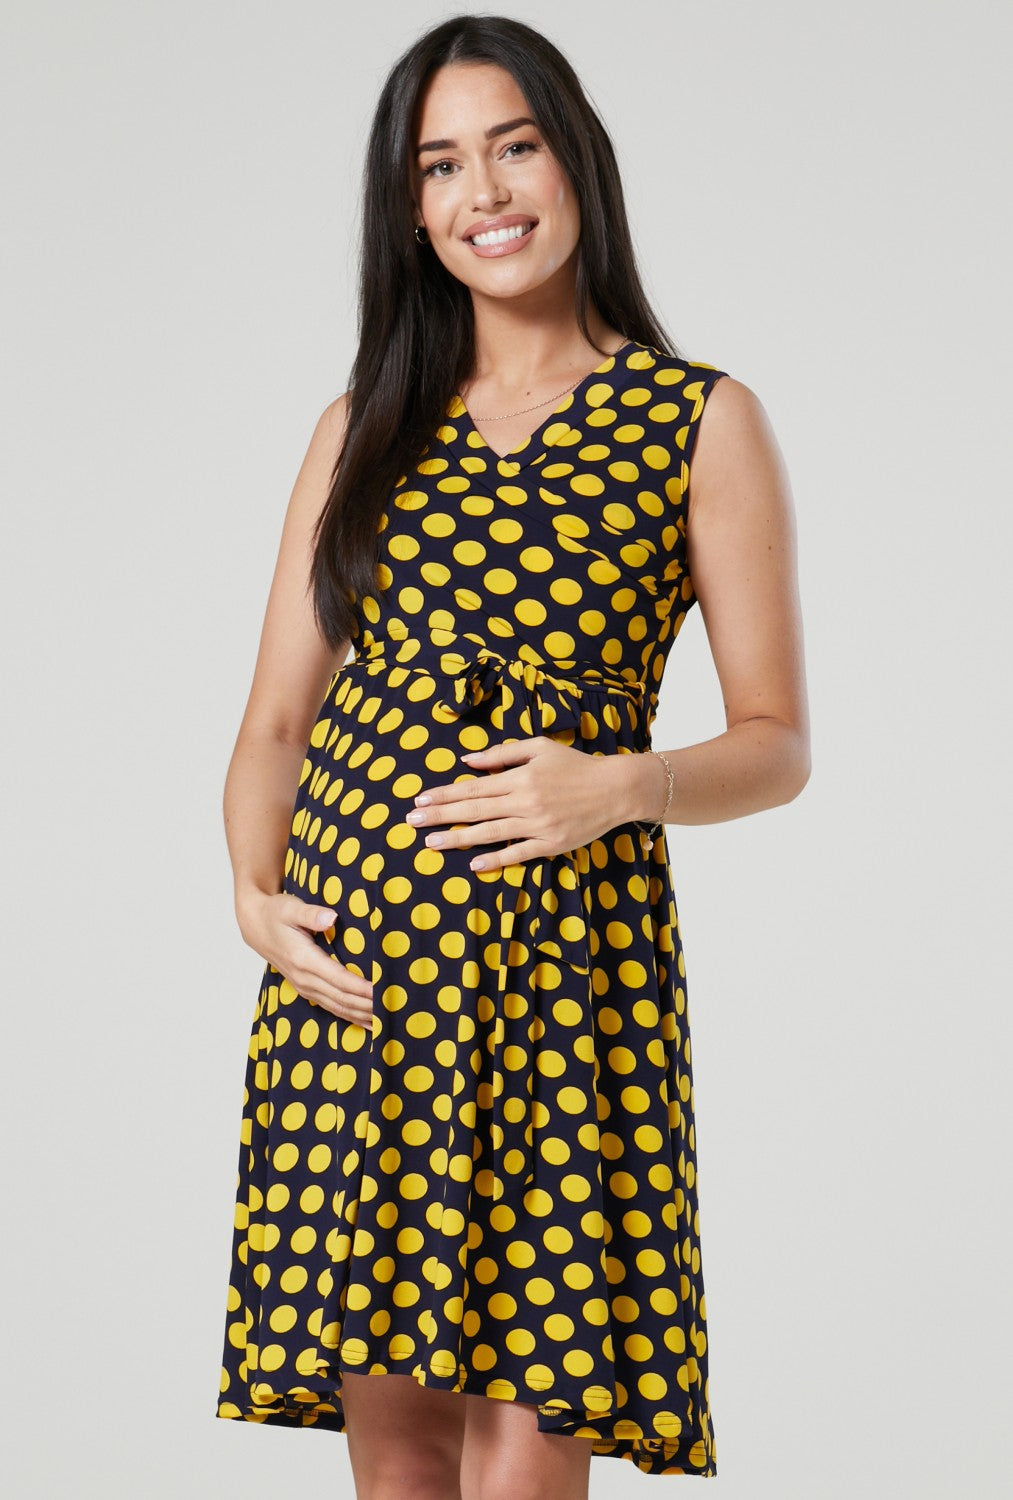 Maternity Nursing Wrap Summer Dress with Print